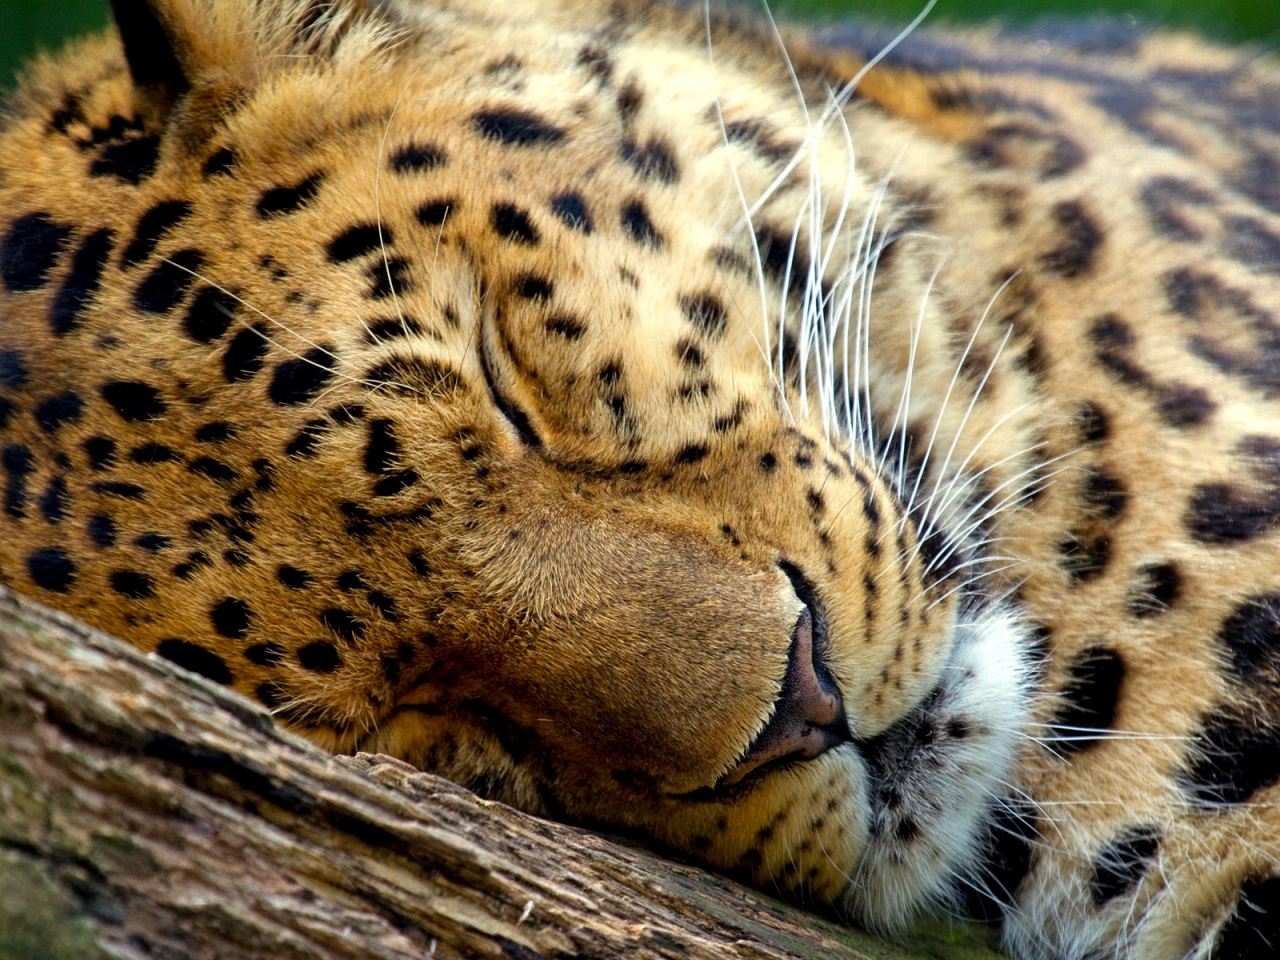 Cute Leopard Sleeping for 1280 x 960 resolution